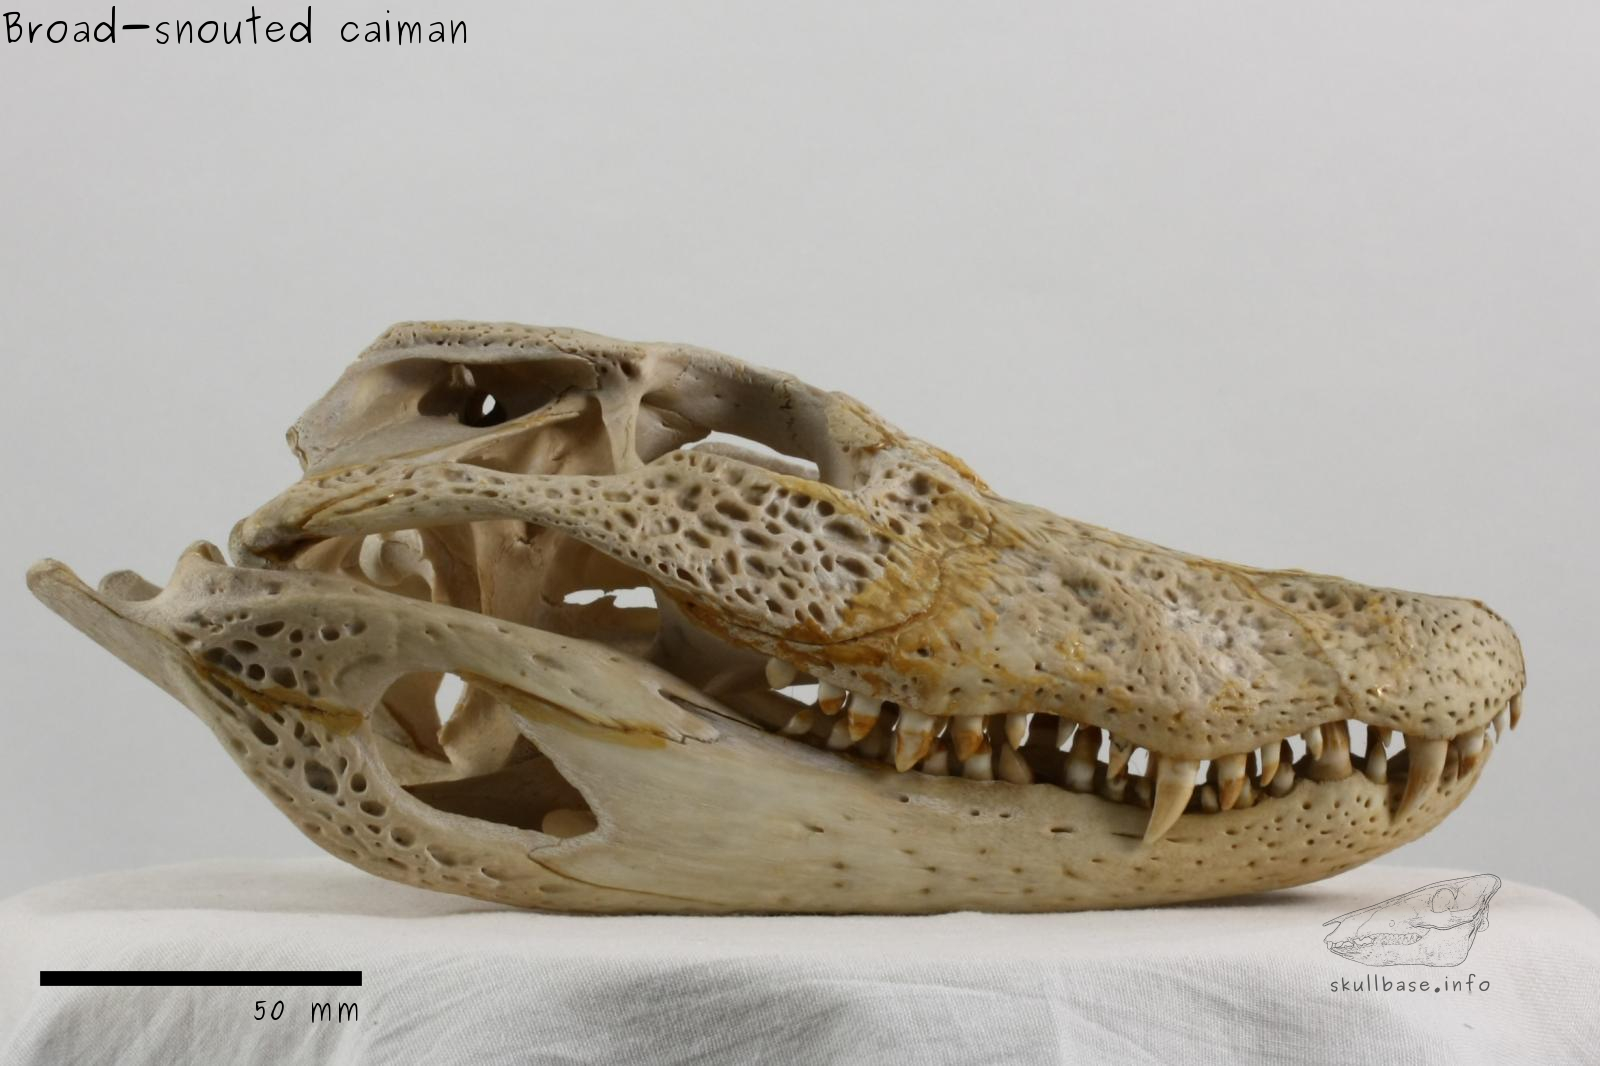 Broad-snouted caiman (Caiman latirostris) skull lateral view